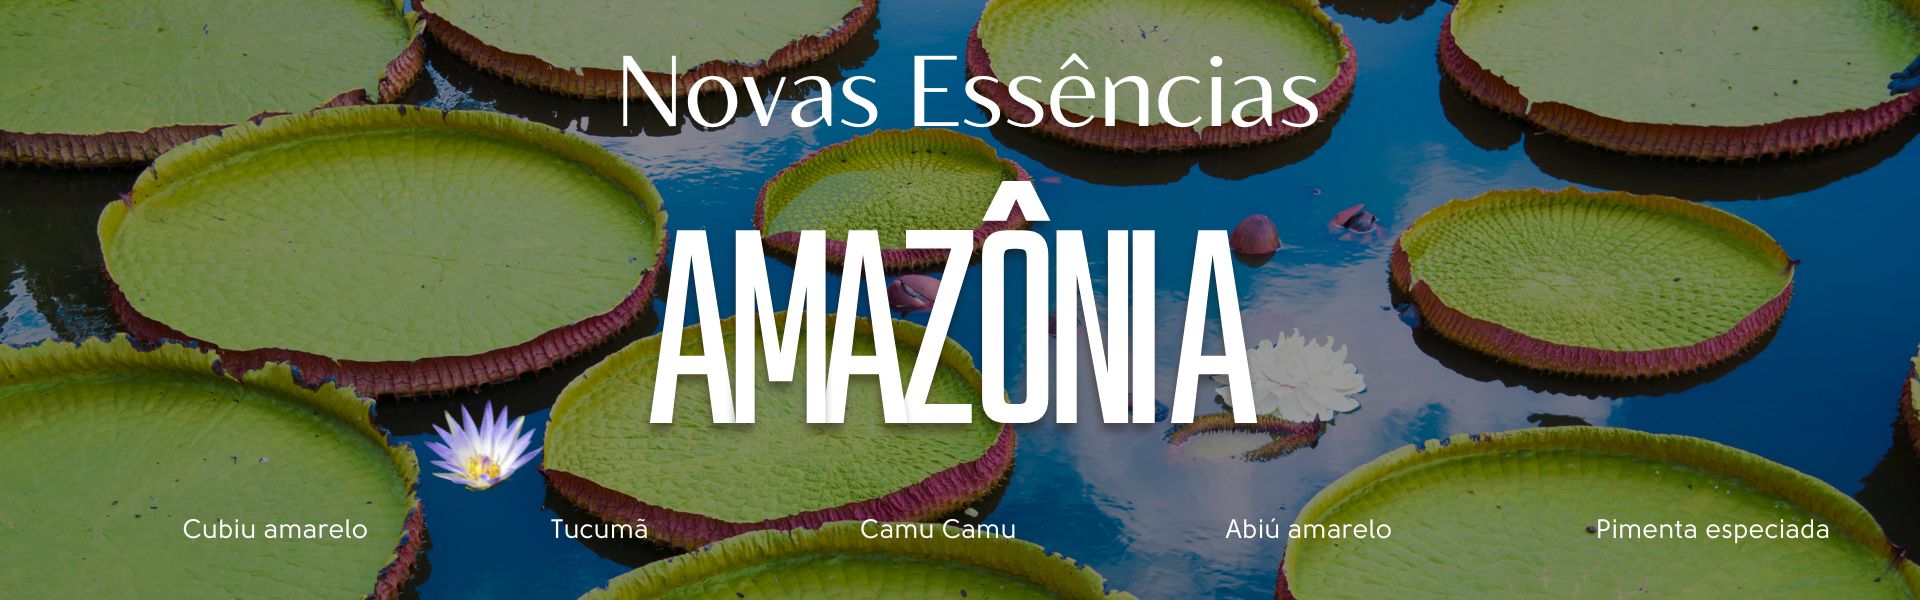 Banner Linha Amazonia